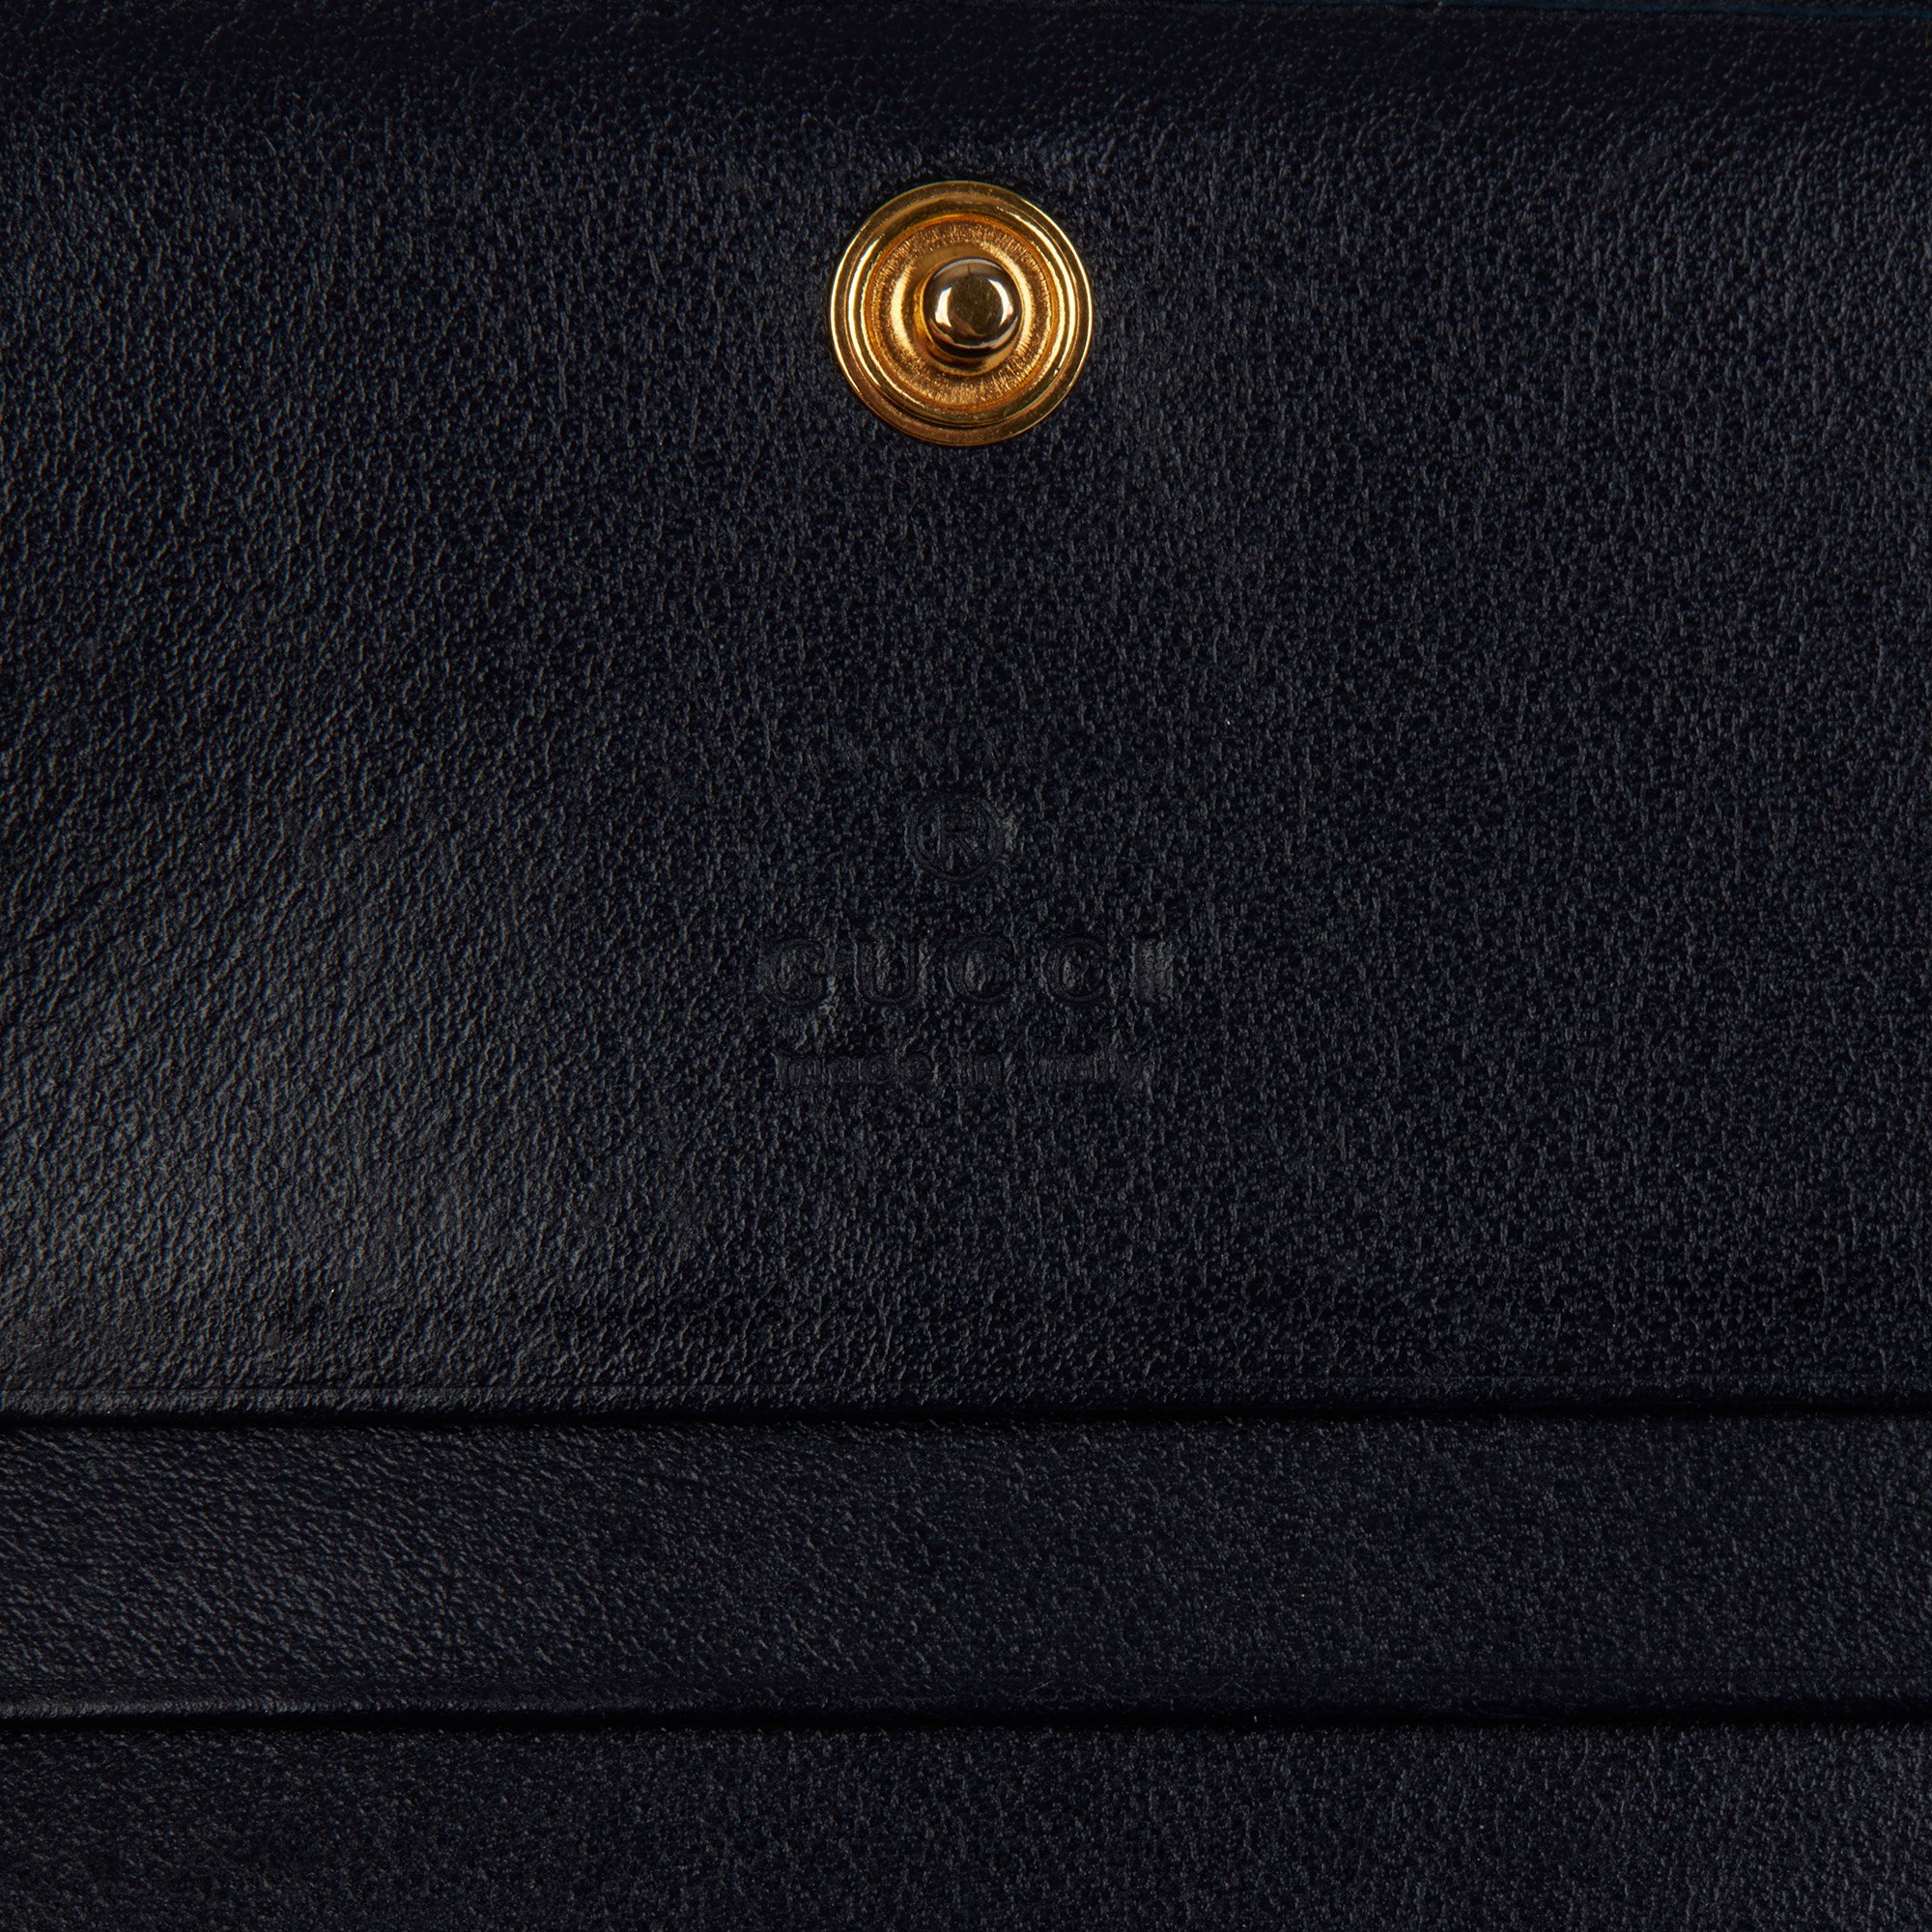 Gucci Beige Canvas & Navy Calfskin Leather Horsebit 1955 Card Case Wallet